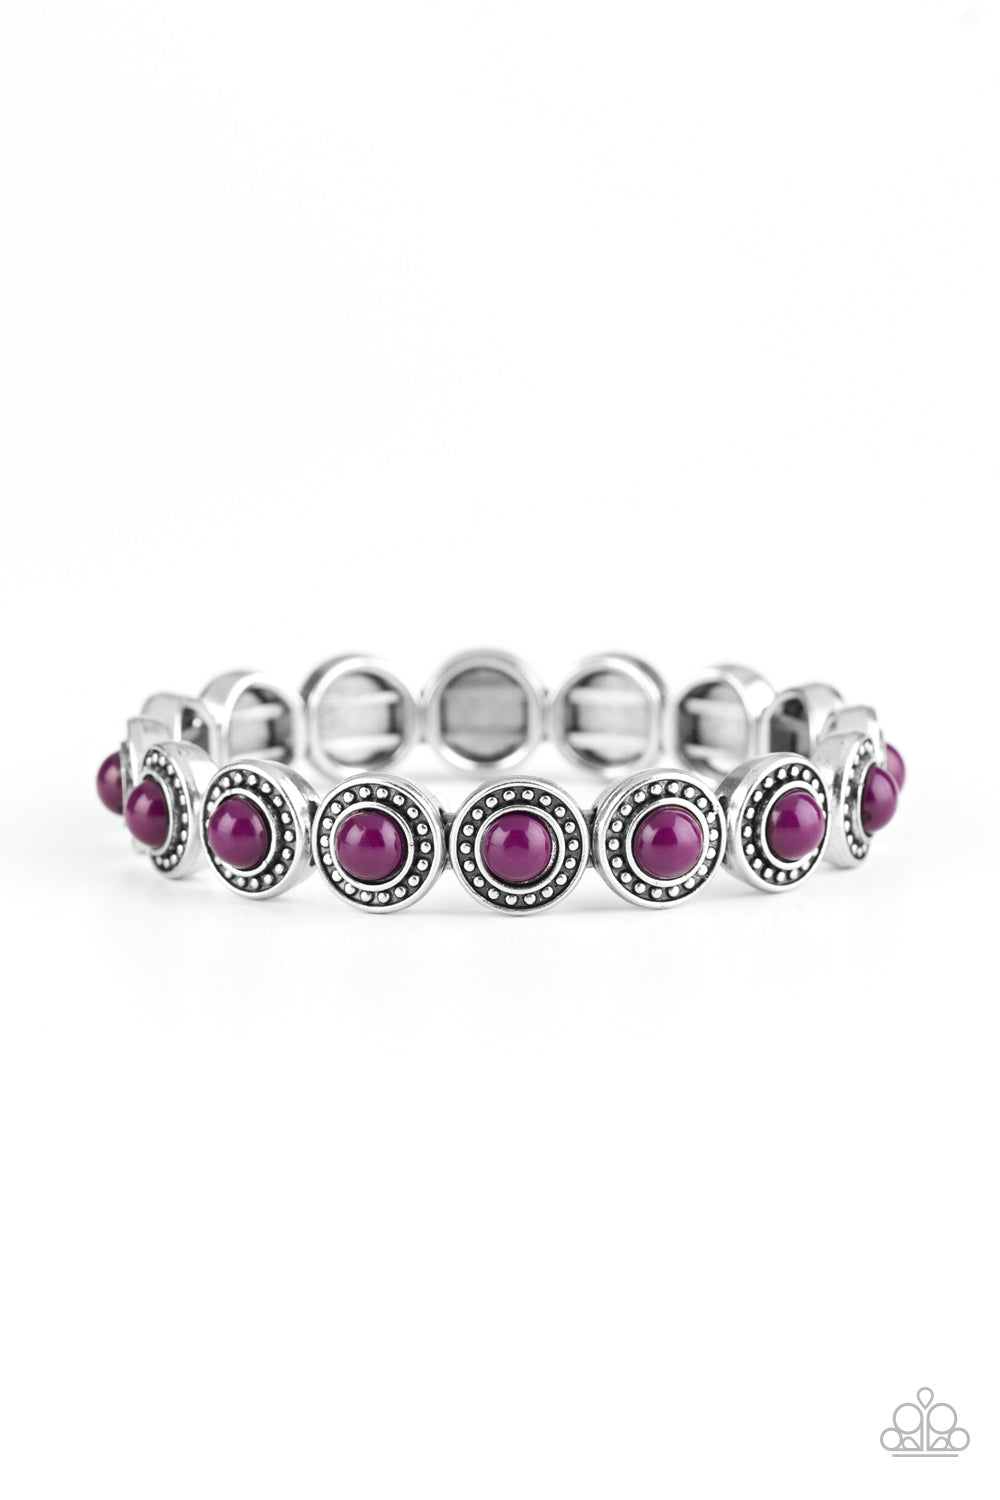 Globetrotter Goals Purple Paparazzi Bracelet Cashmere Pink Jewels